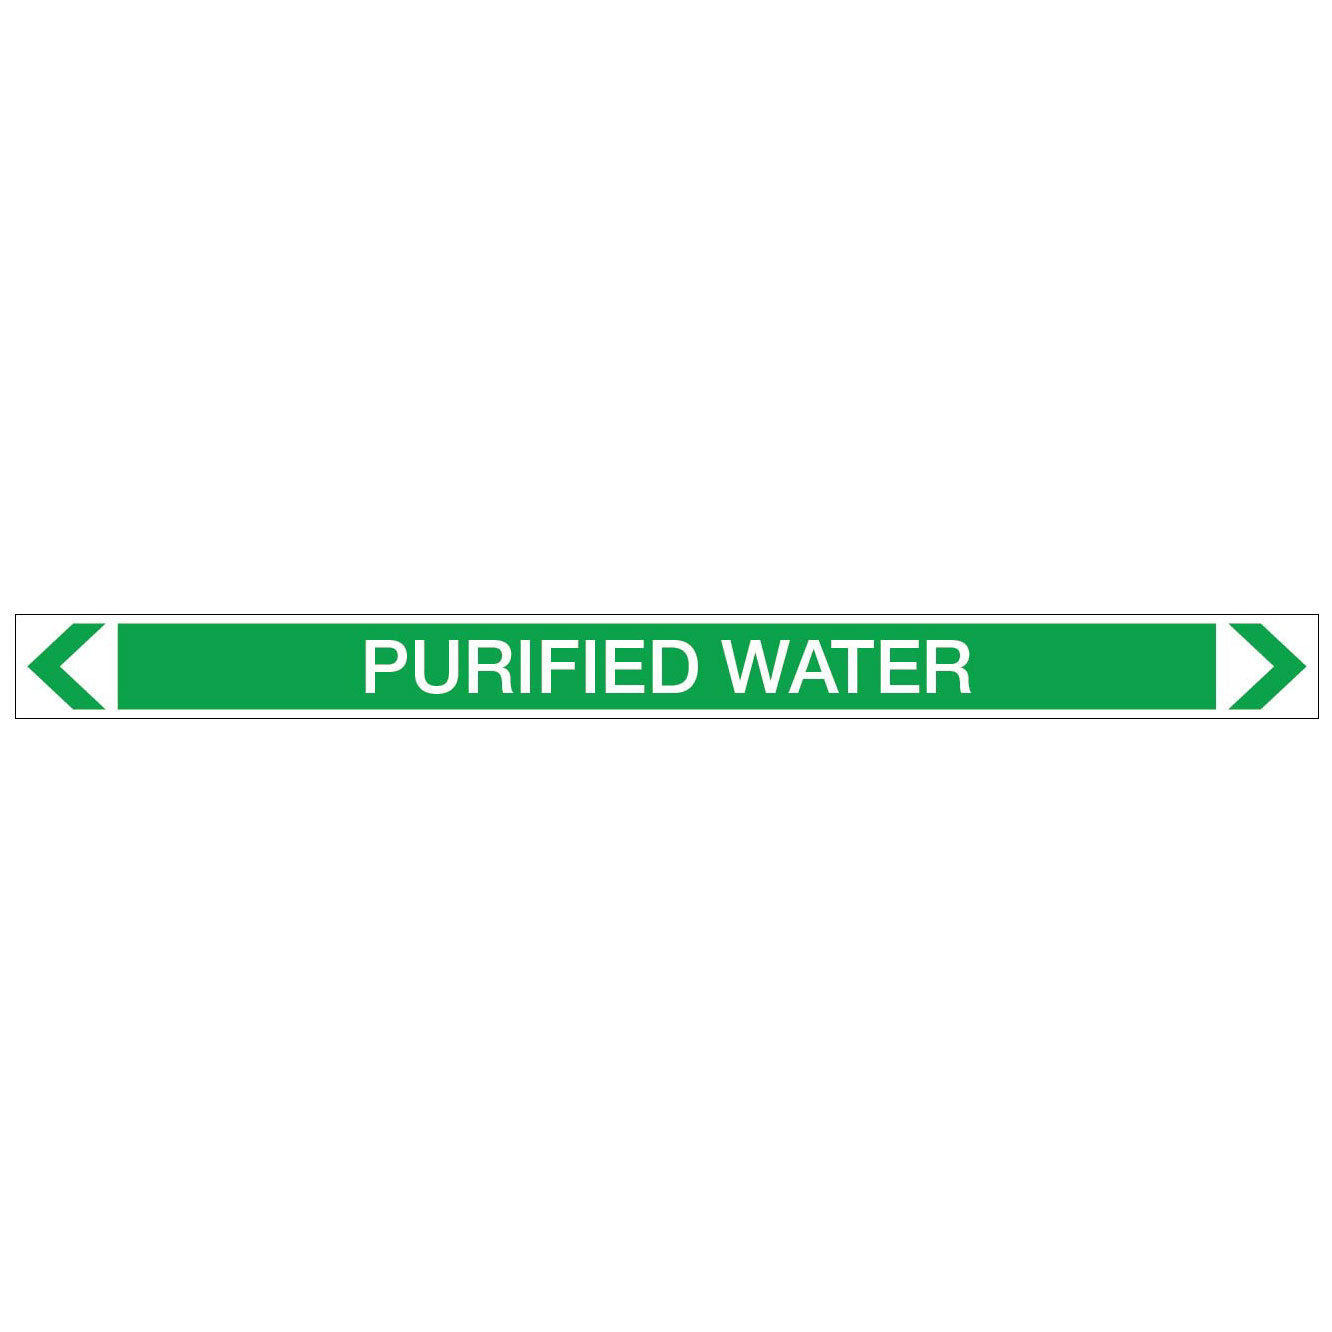 Water - Purified Water - Pipe Marker Sticker